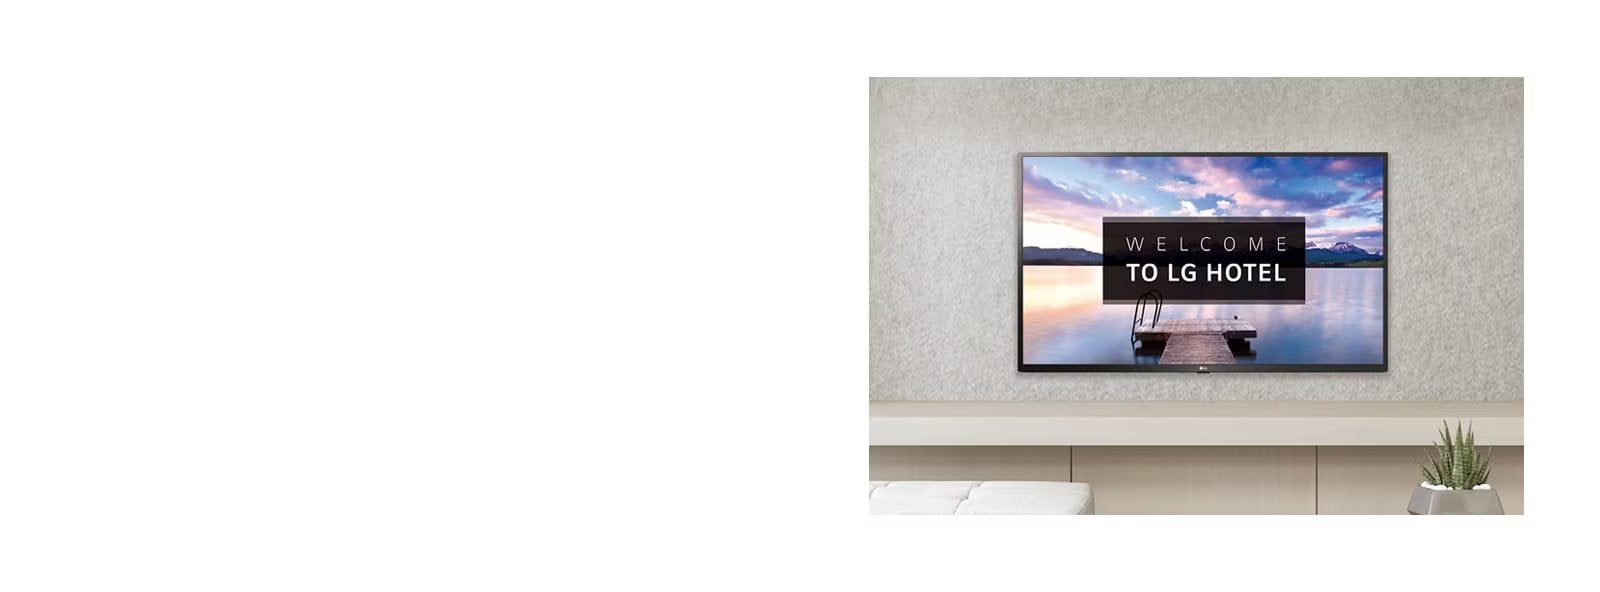 LG 65US662H 65" Pro:Centric Smart Hotel TV